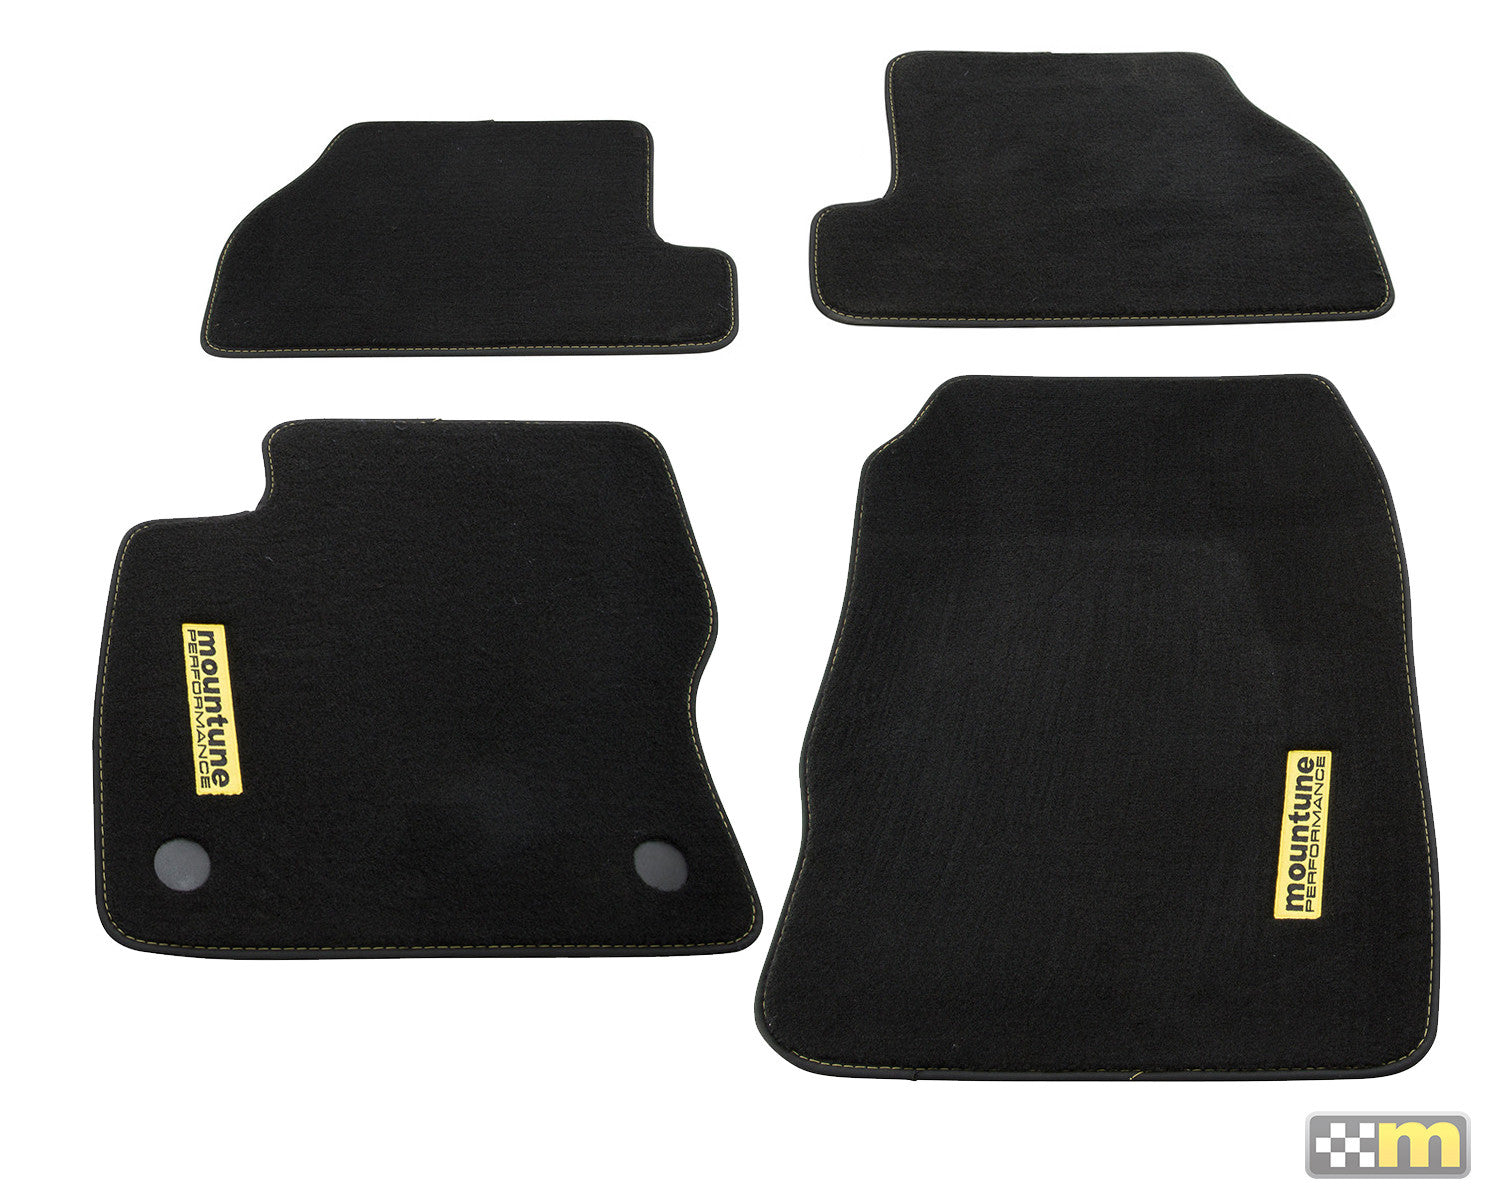 mountune LUX Floor Mats [Mk3 Focus RS/ST] Interior Styling mountune   